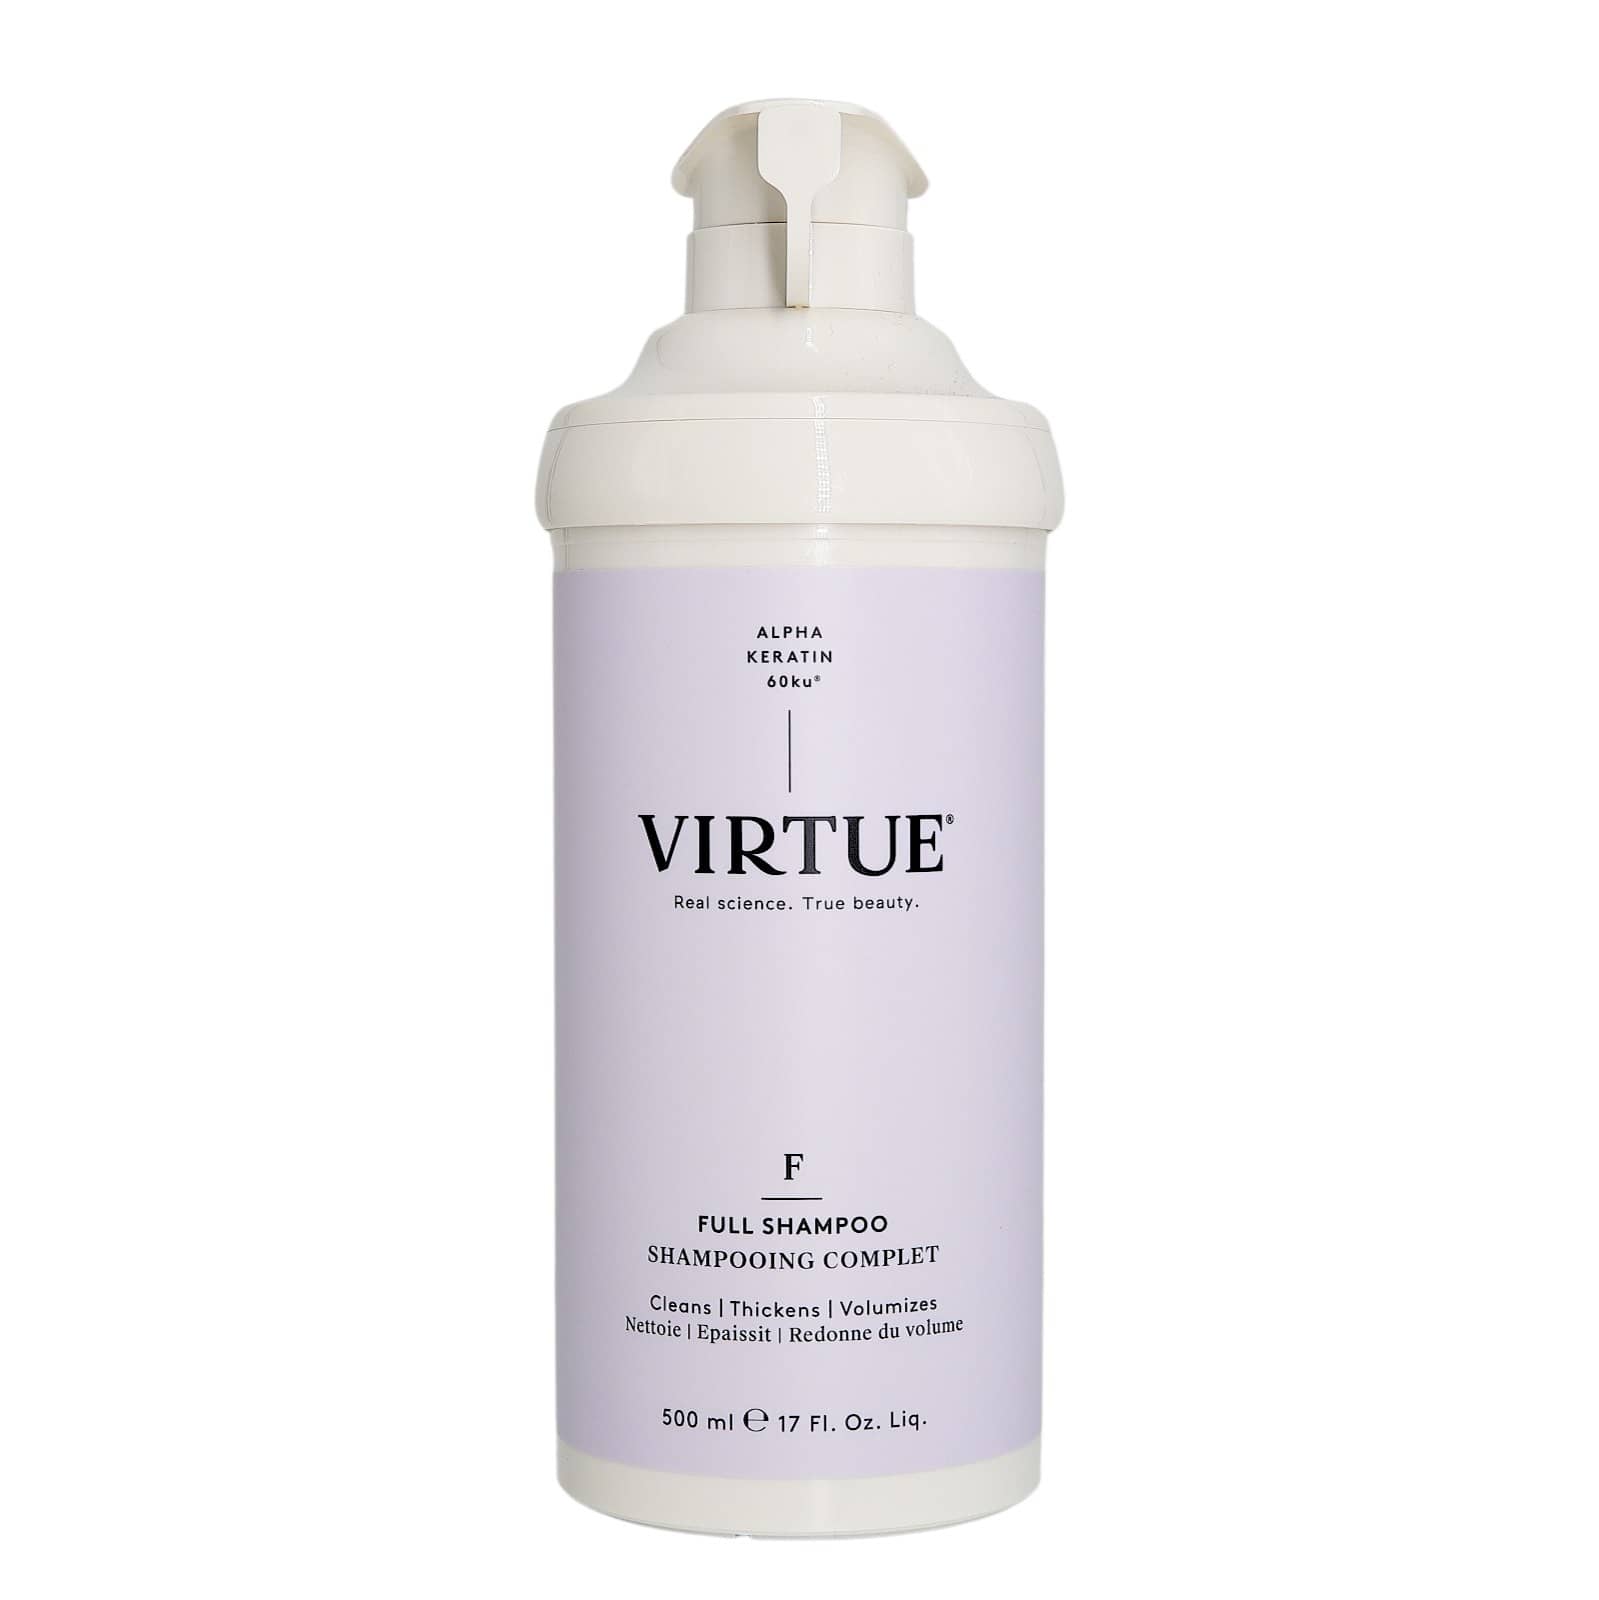 Virtue full shampoo 500ml